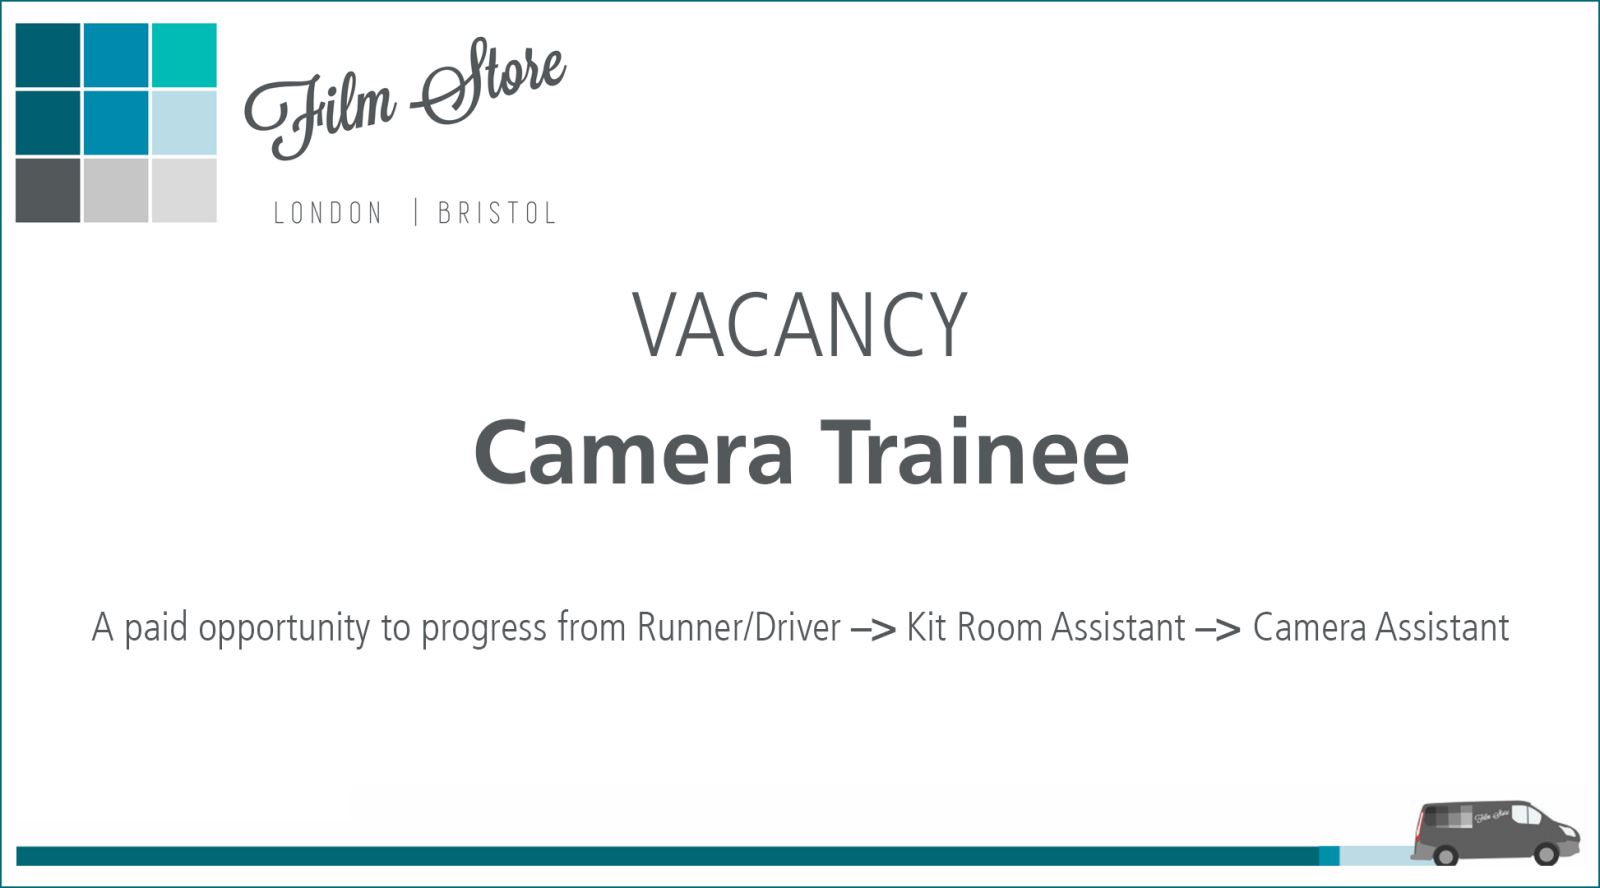 Film Store Camera Trainee Vacancy